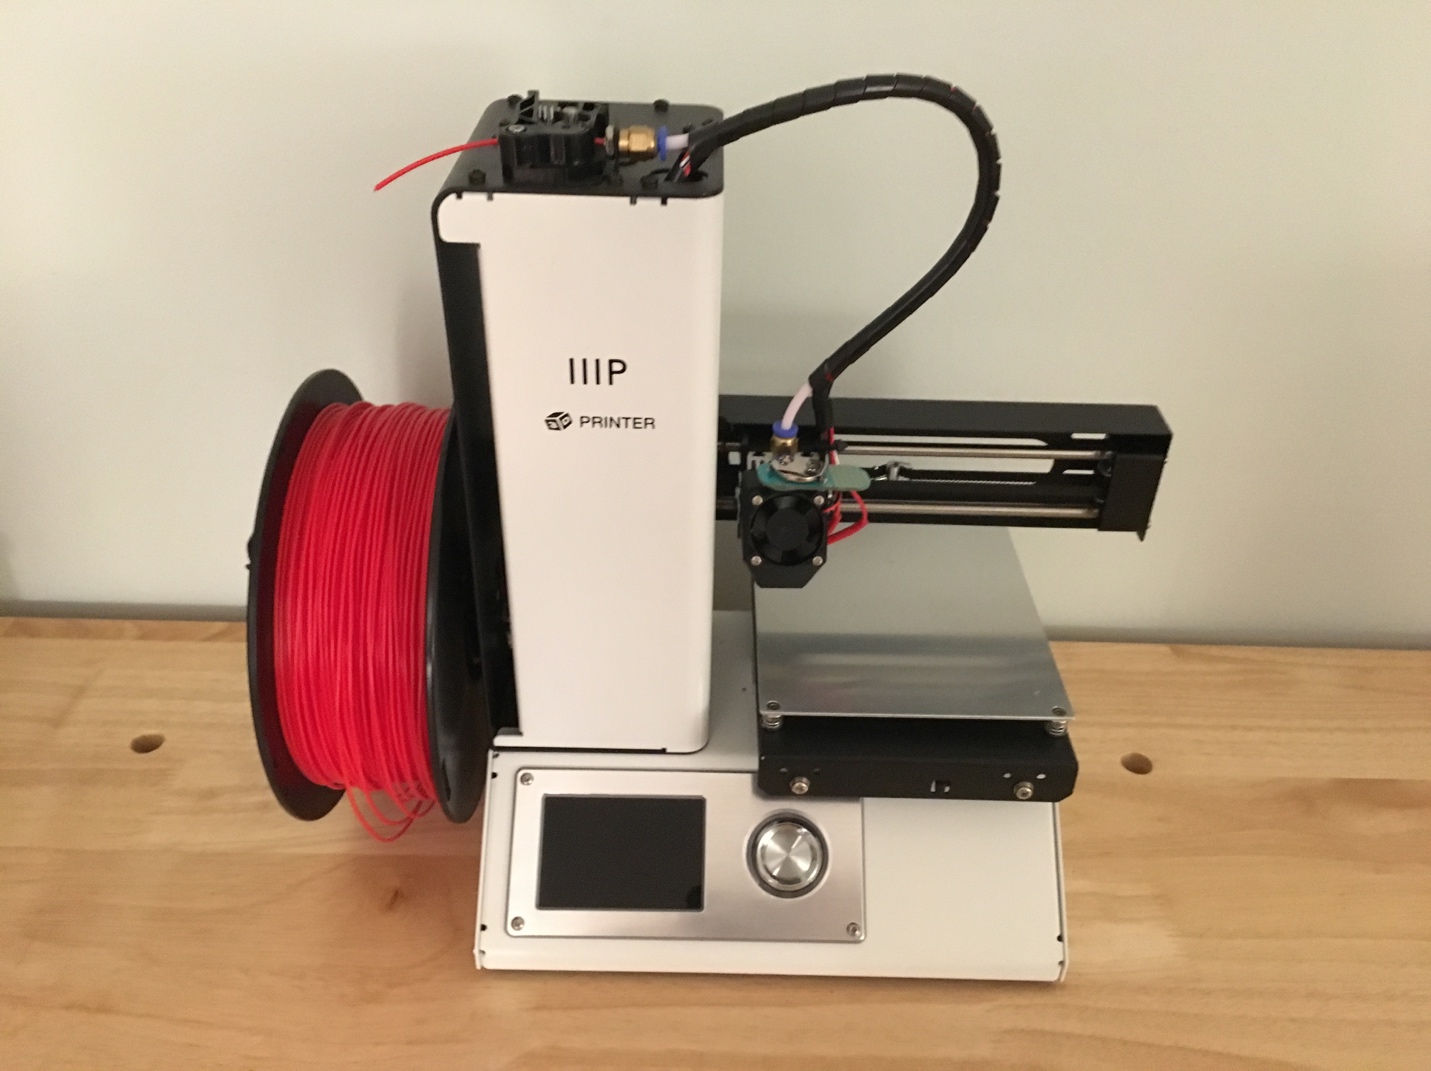 Atropos. Machine collaborator: Monoprice IIIP 3D printer.